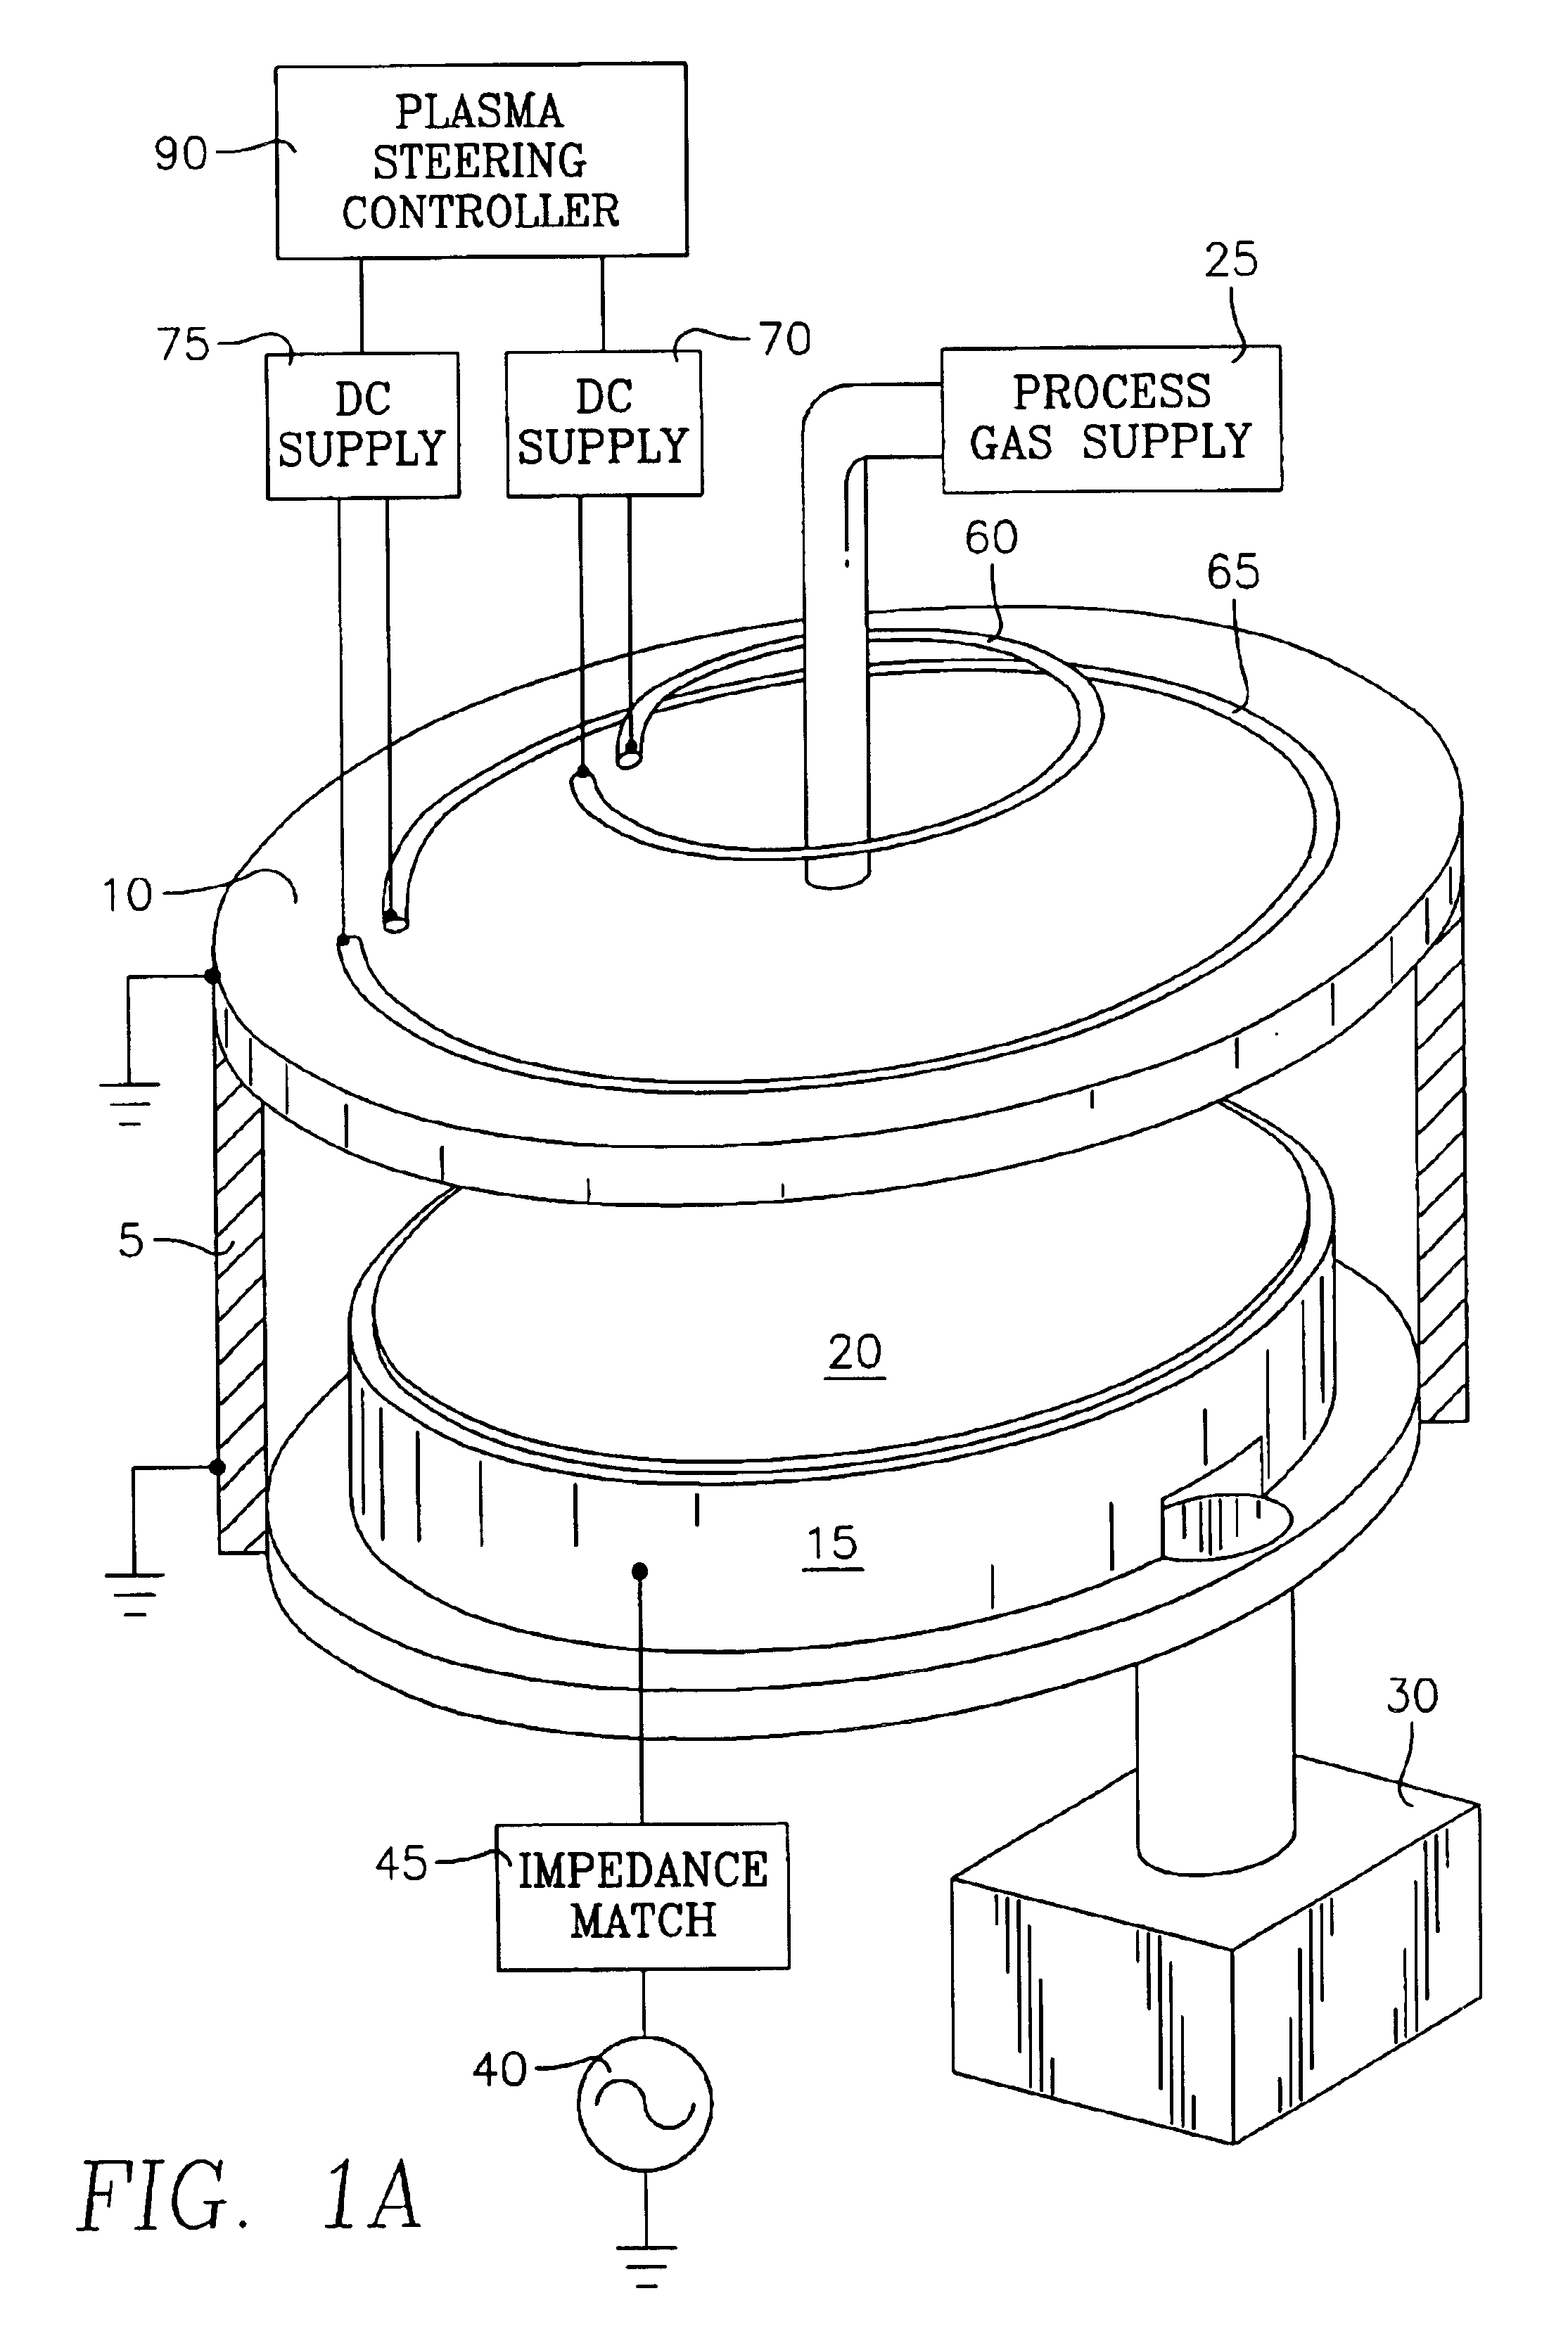 Capacitively coupled plasma reactor with uniform radial distribution of plasma